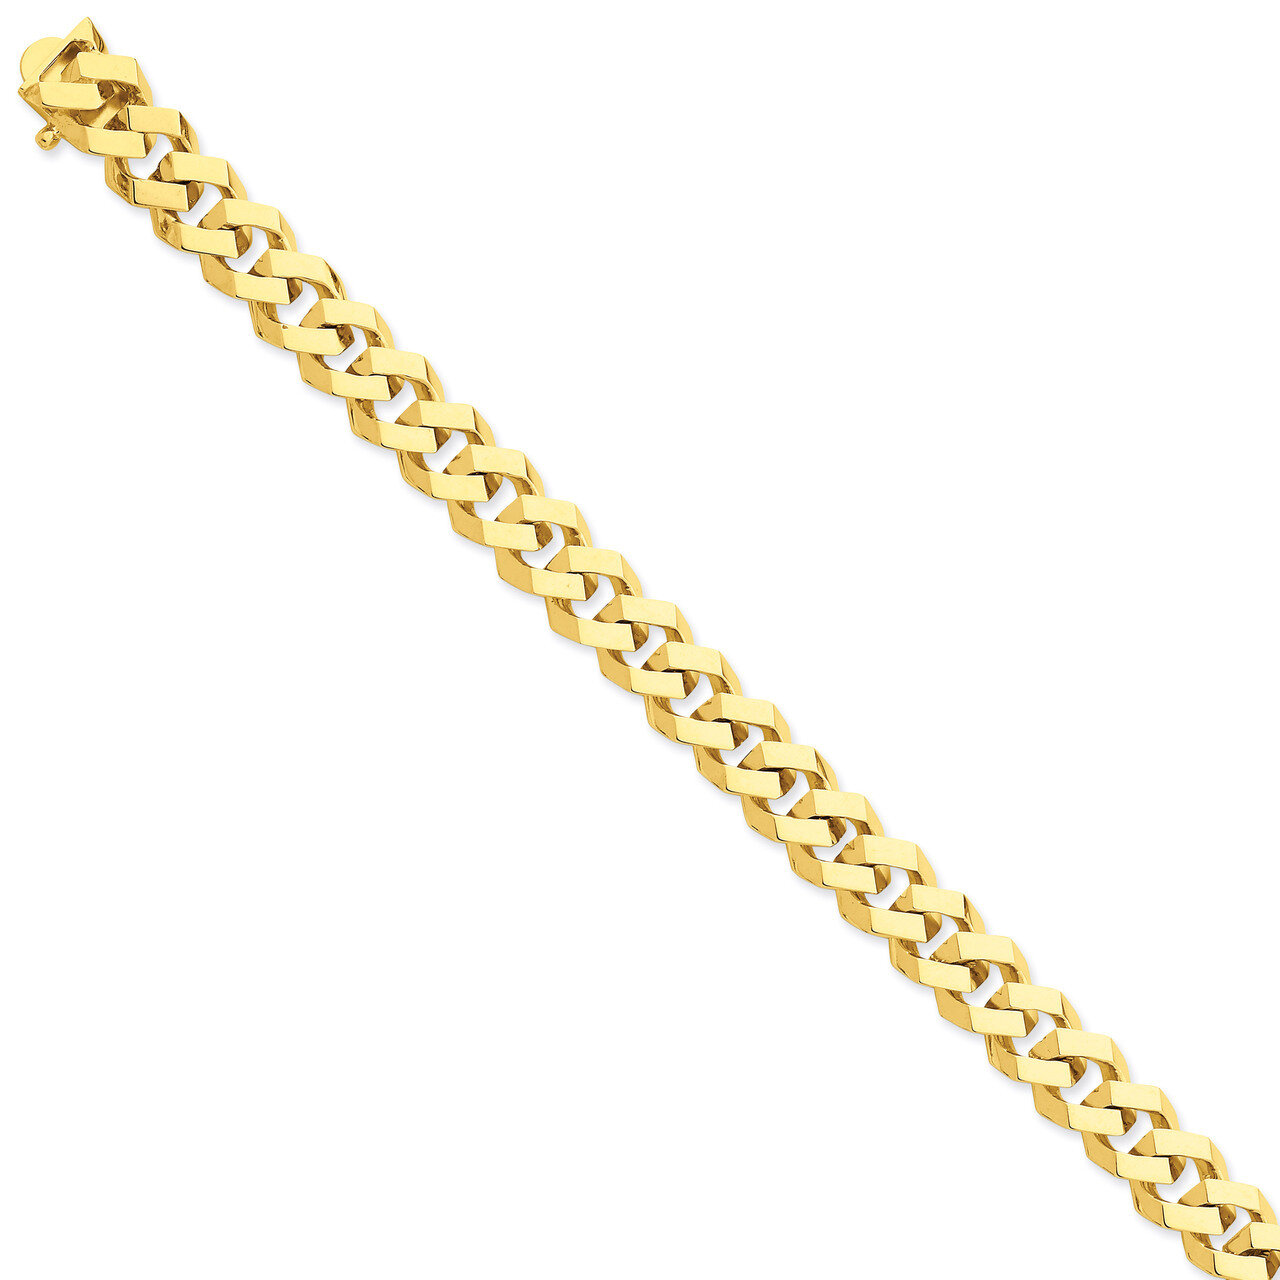 10mm Hand-polished Fancy Link Chain 24 Inch 14k Gold LK158-24